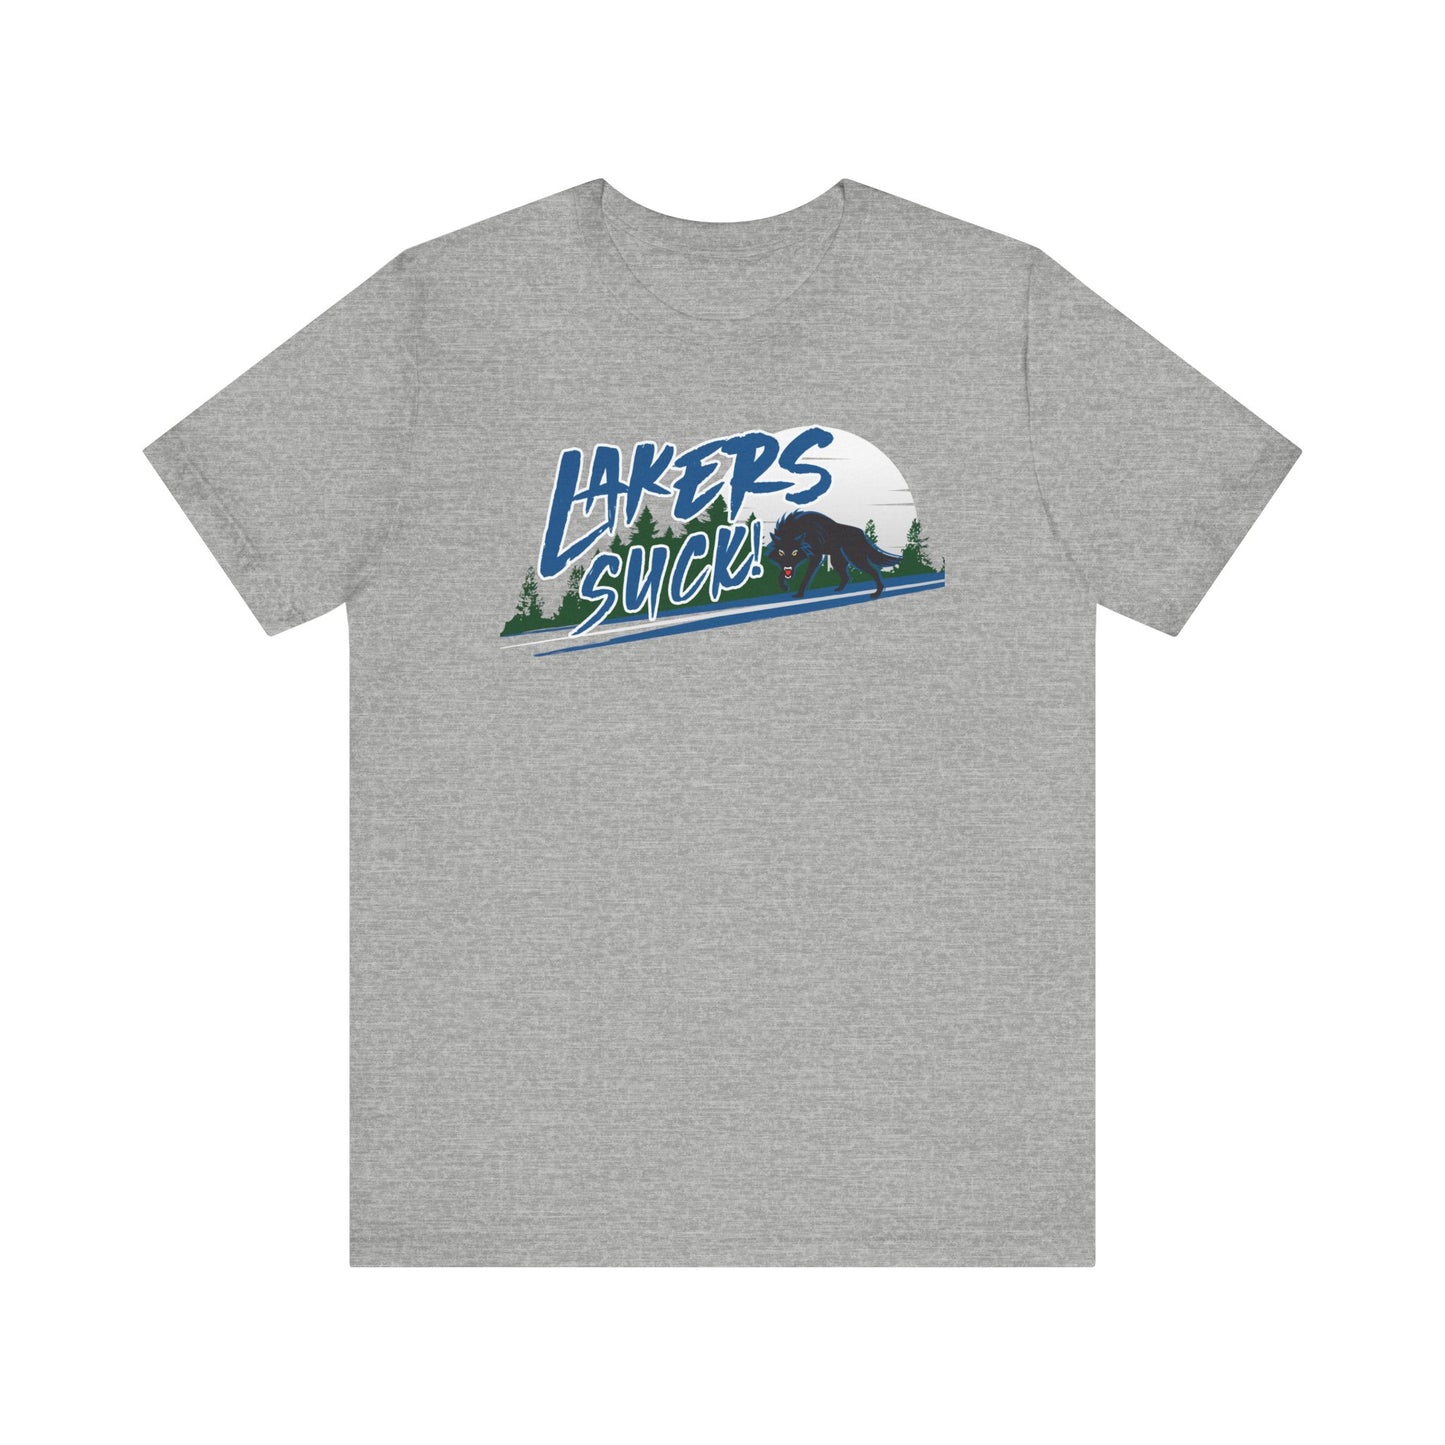 Laykers Suck (for Minnesota fans) - Unisex Jersey Short Sleeve Tee